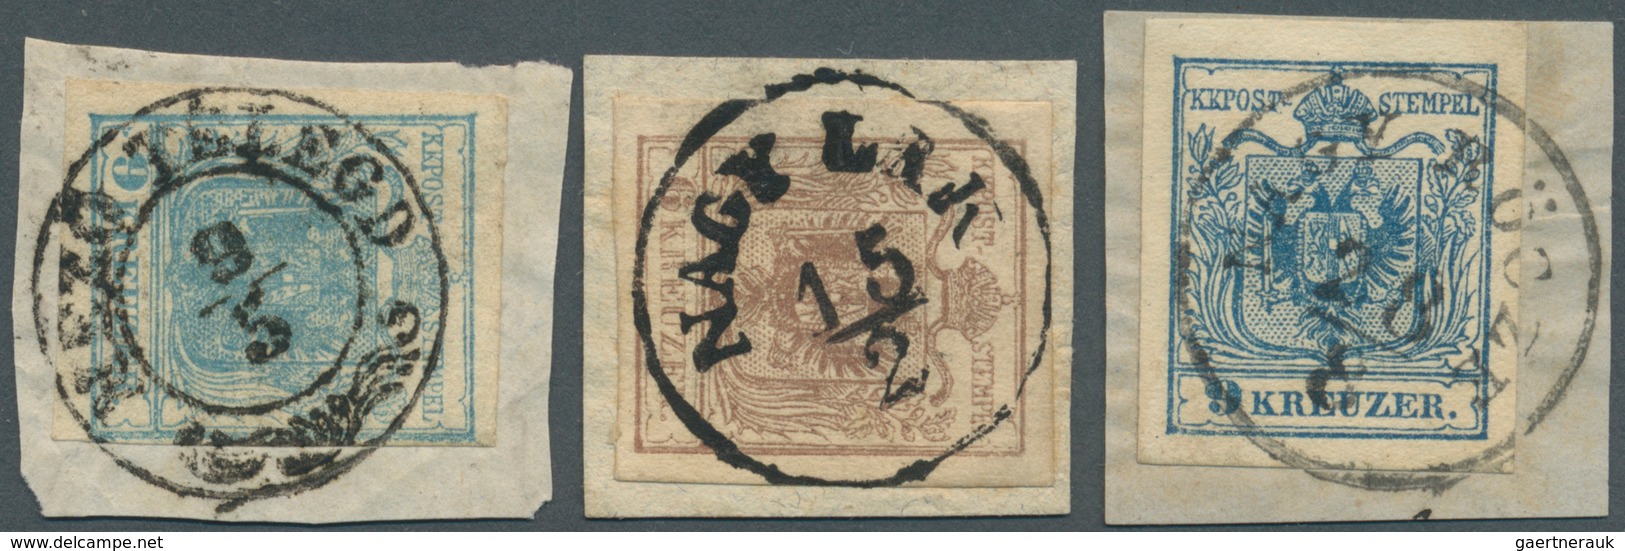 Österreich - Stempel: 1850, "MEZÖ TELEGD" Zier-K2, "NAGY LAK" K1 Und "NAGY BÖSZK" Je Auf Briefstück - Macchine Per Obliterare (EMA)